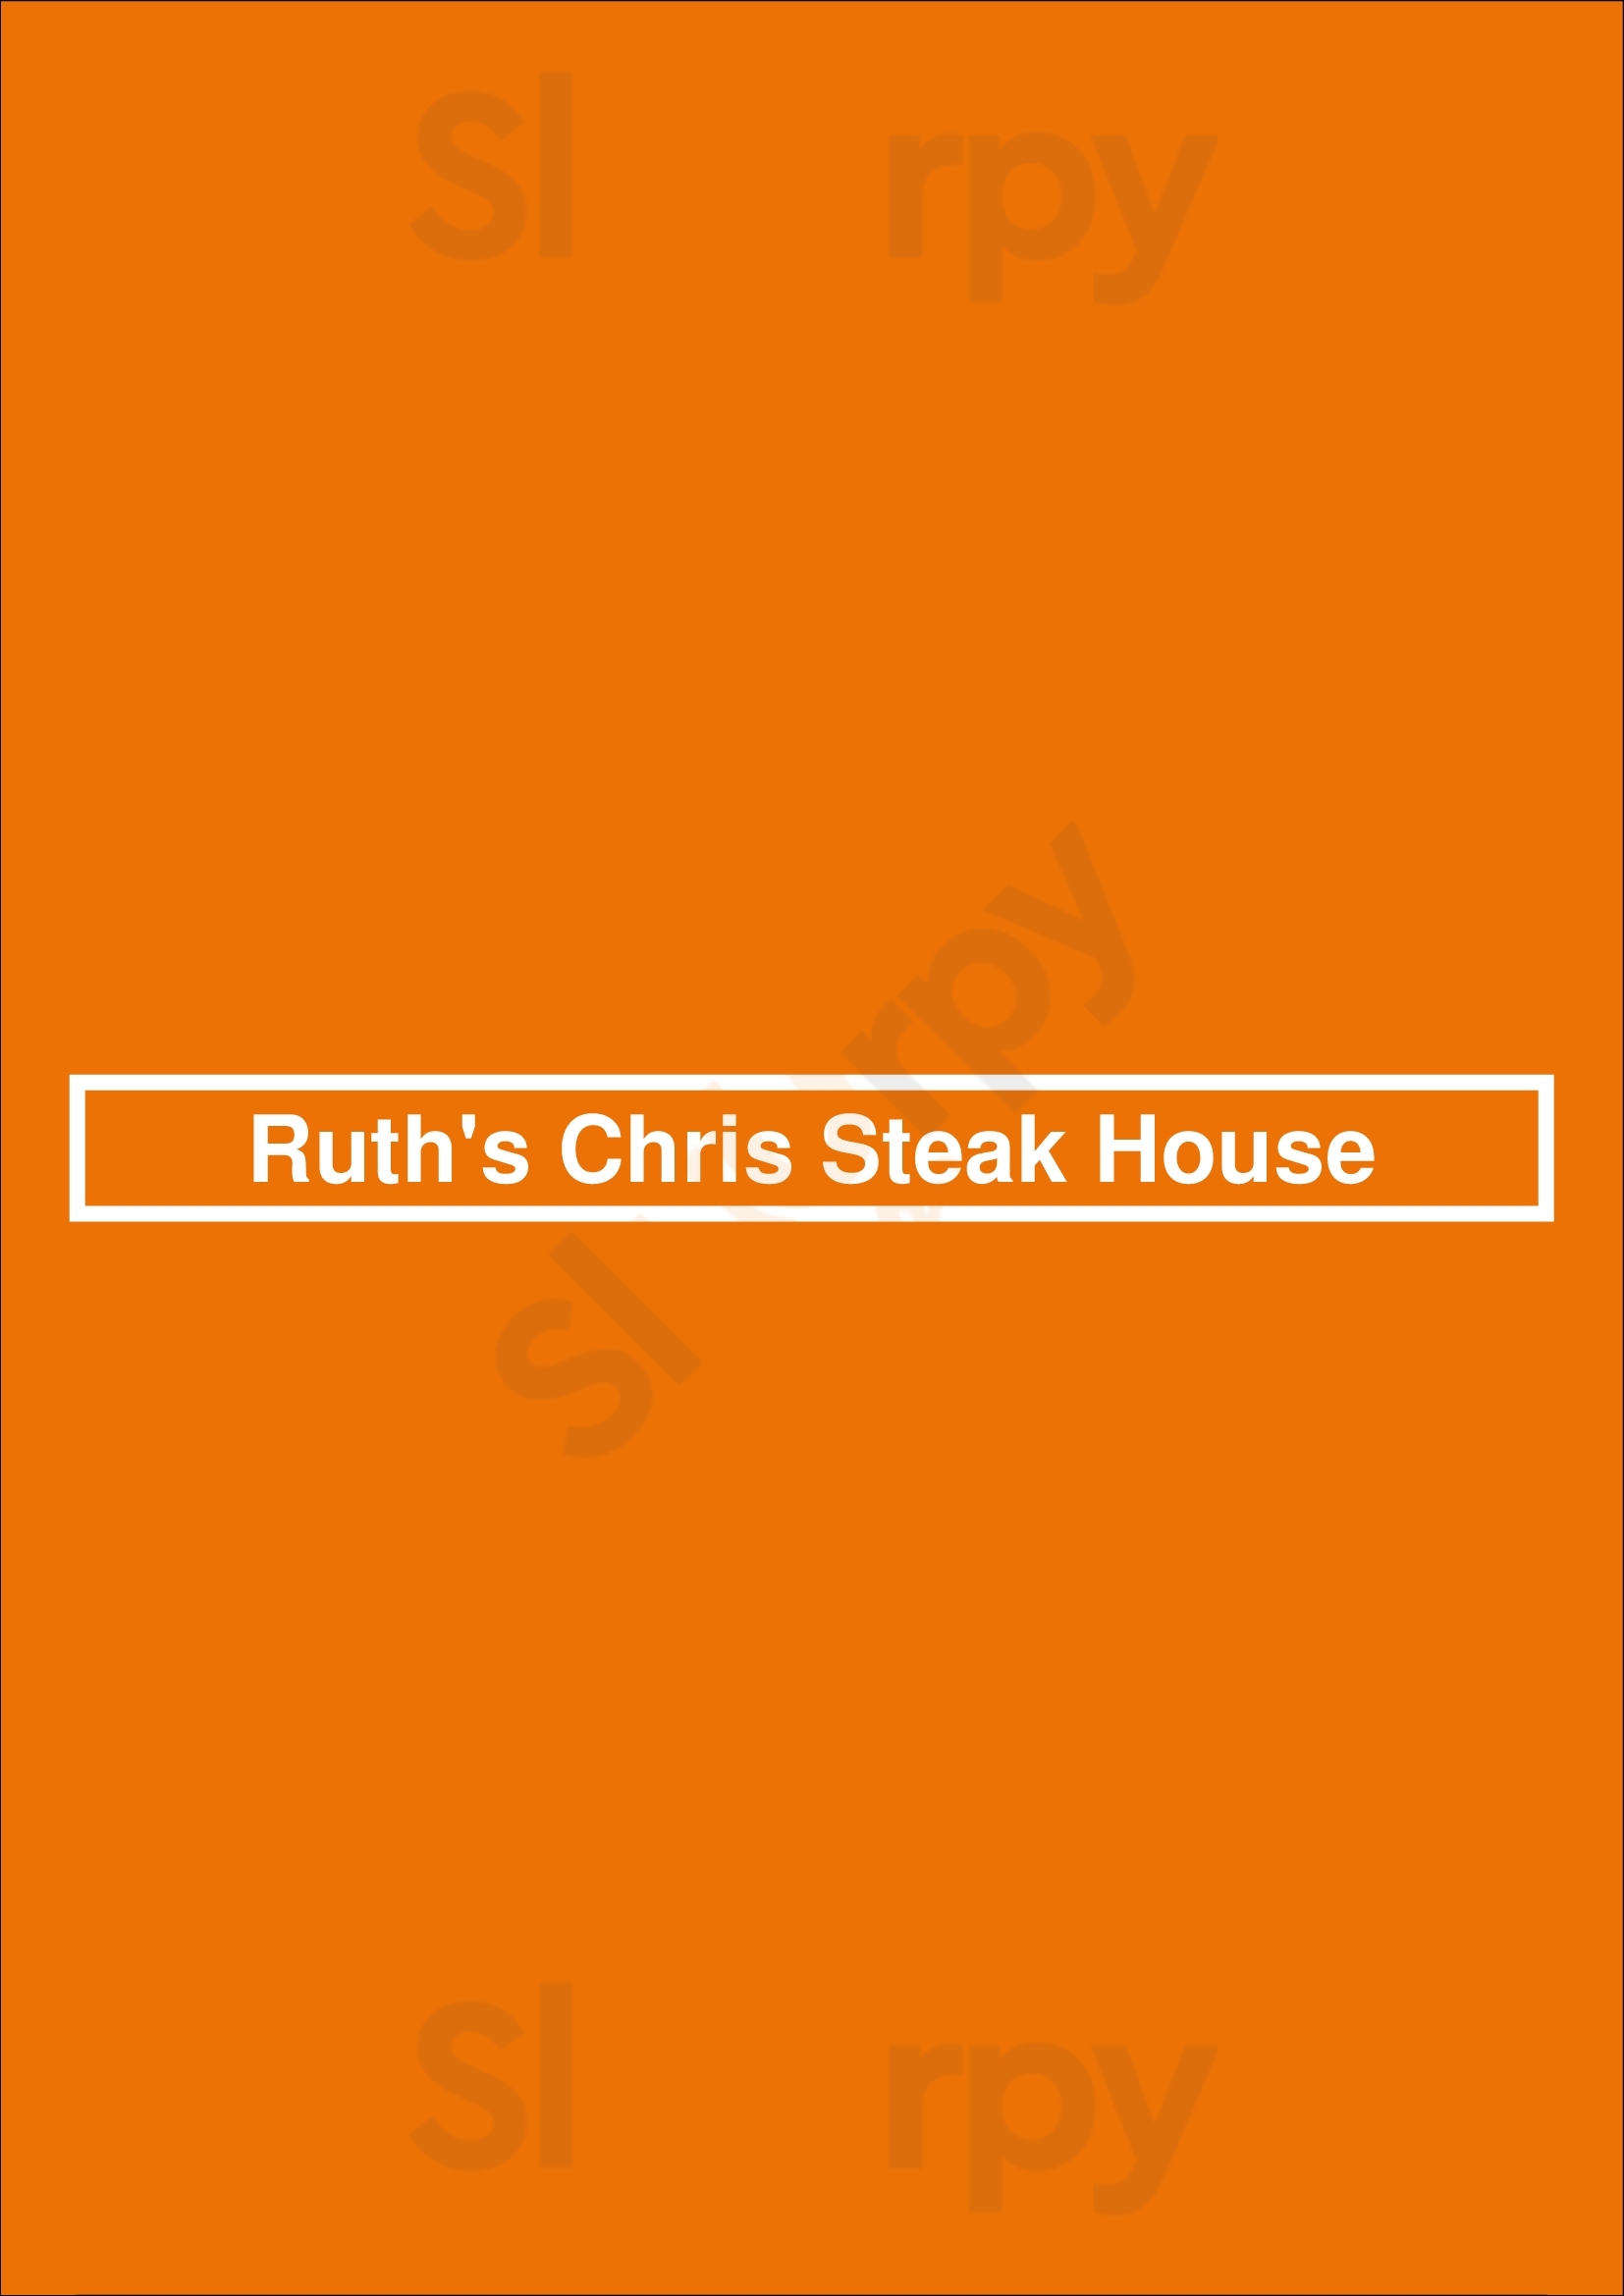 Ruth's Chris Steak House Calgary Menu - 1